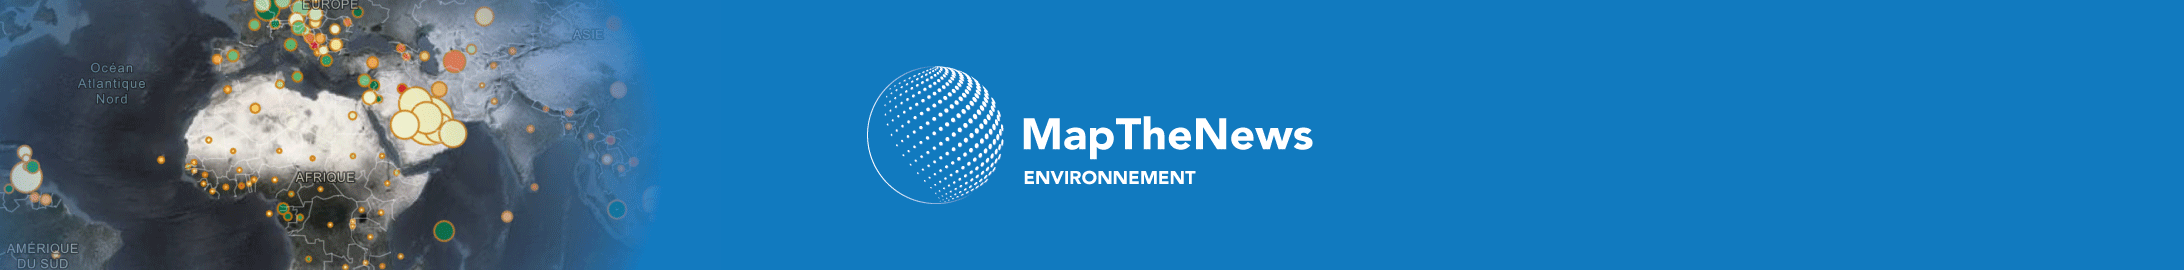 MapTheNews Environnement